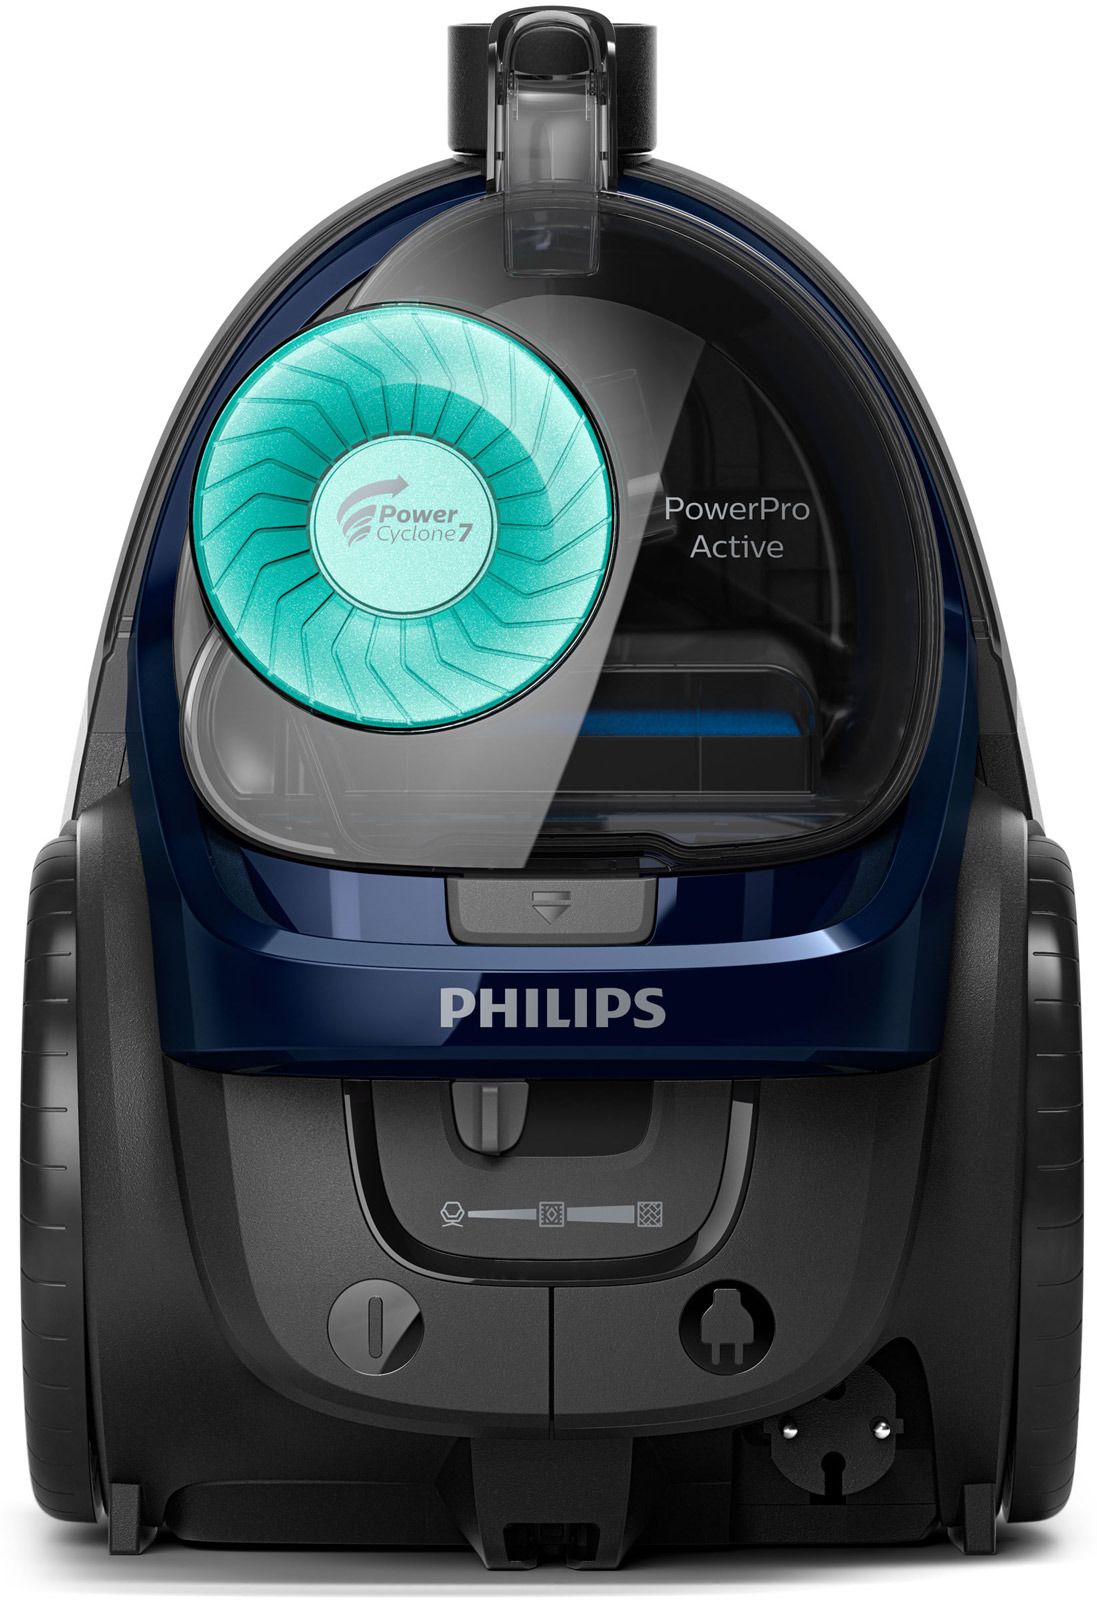   Philips PowerPro Active FC9573/01,   PowerCyclone 7, 